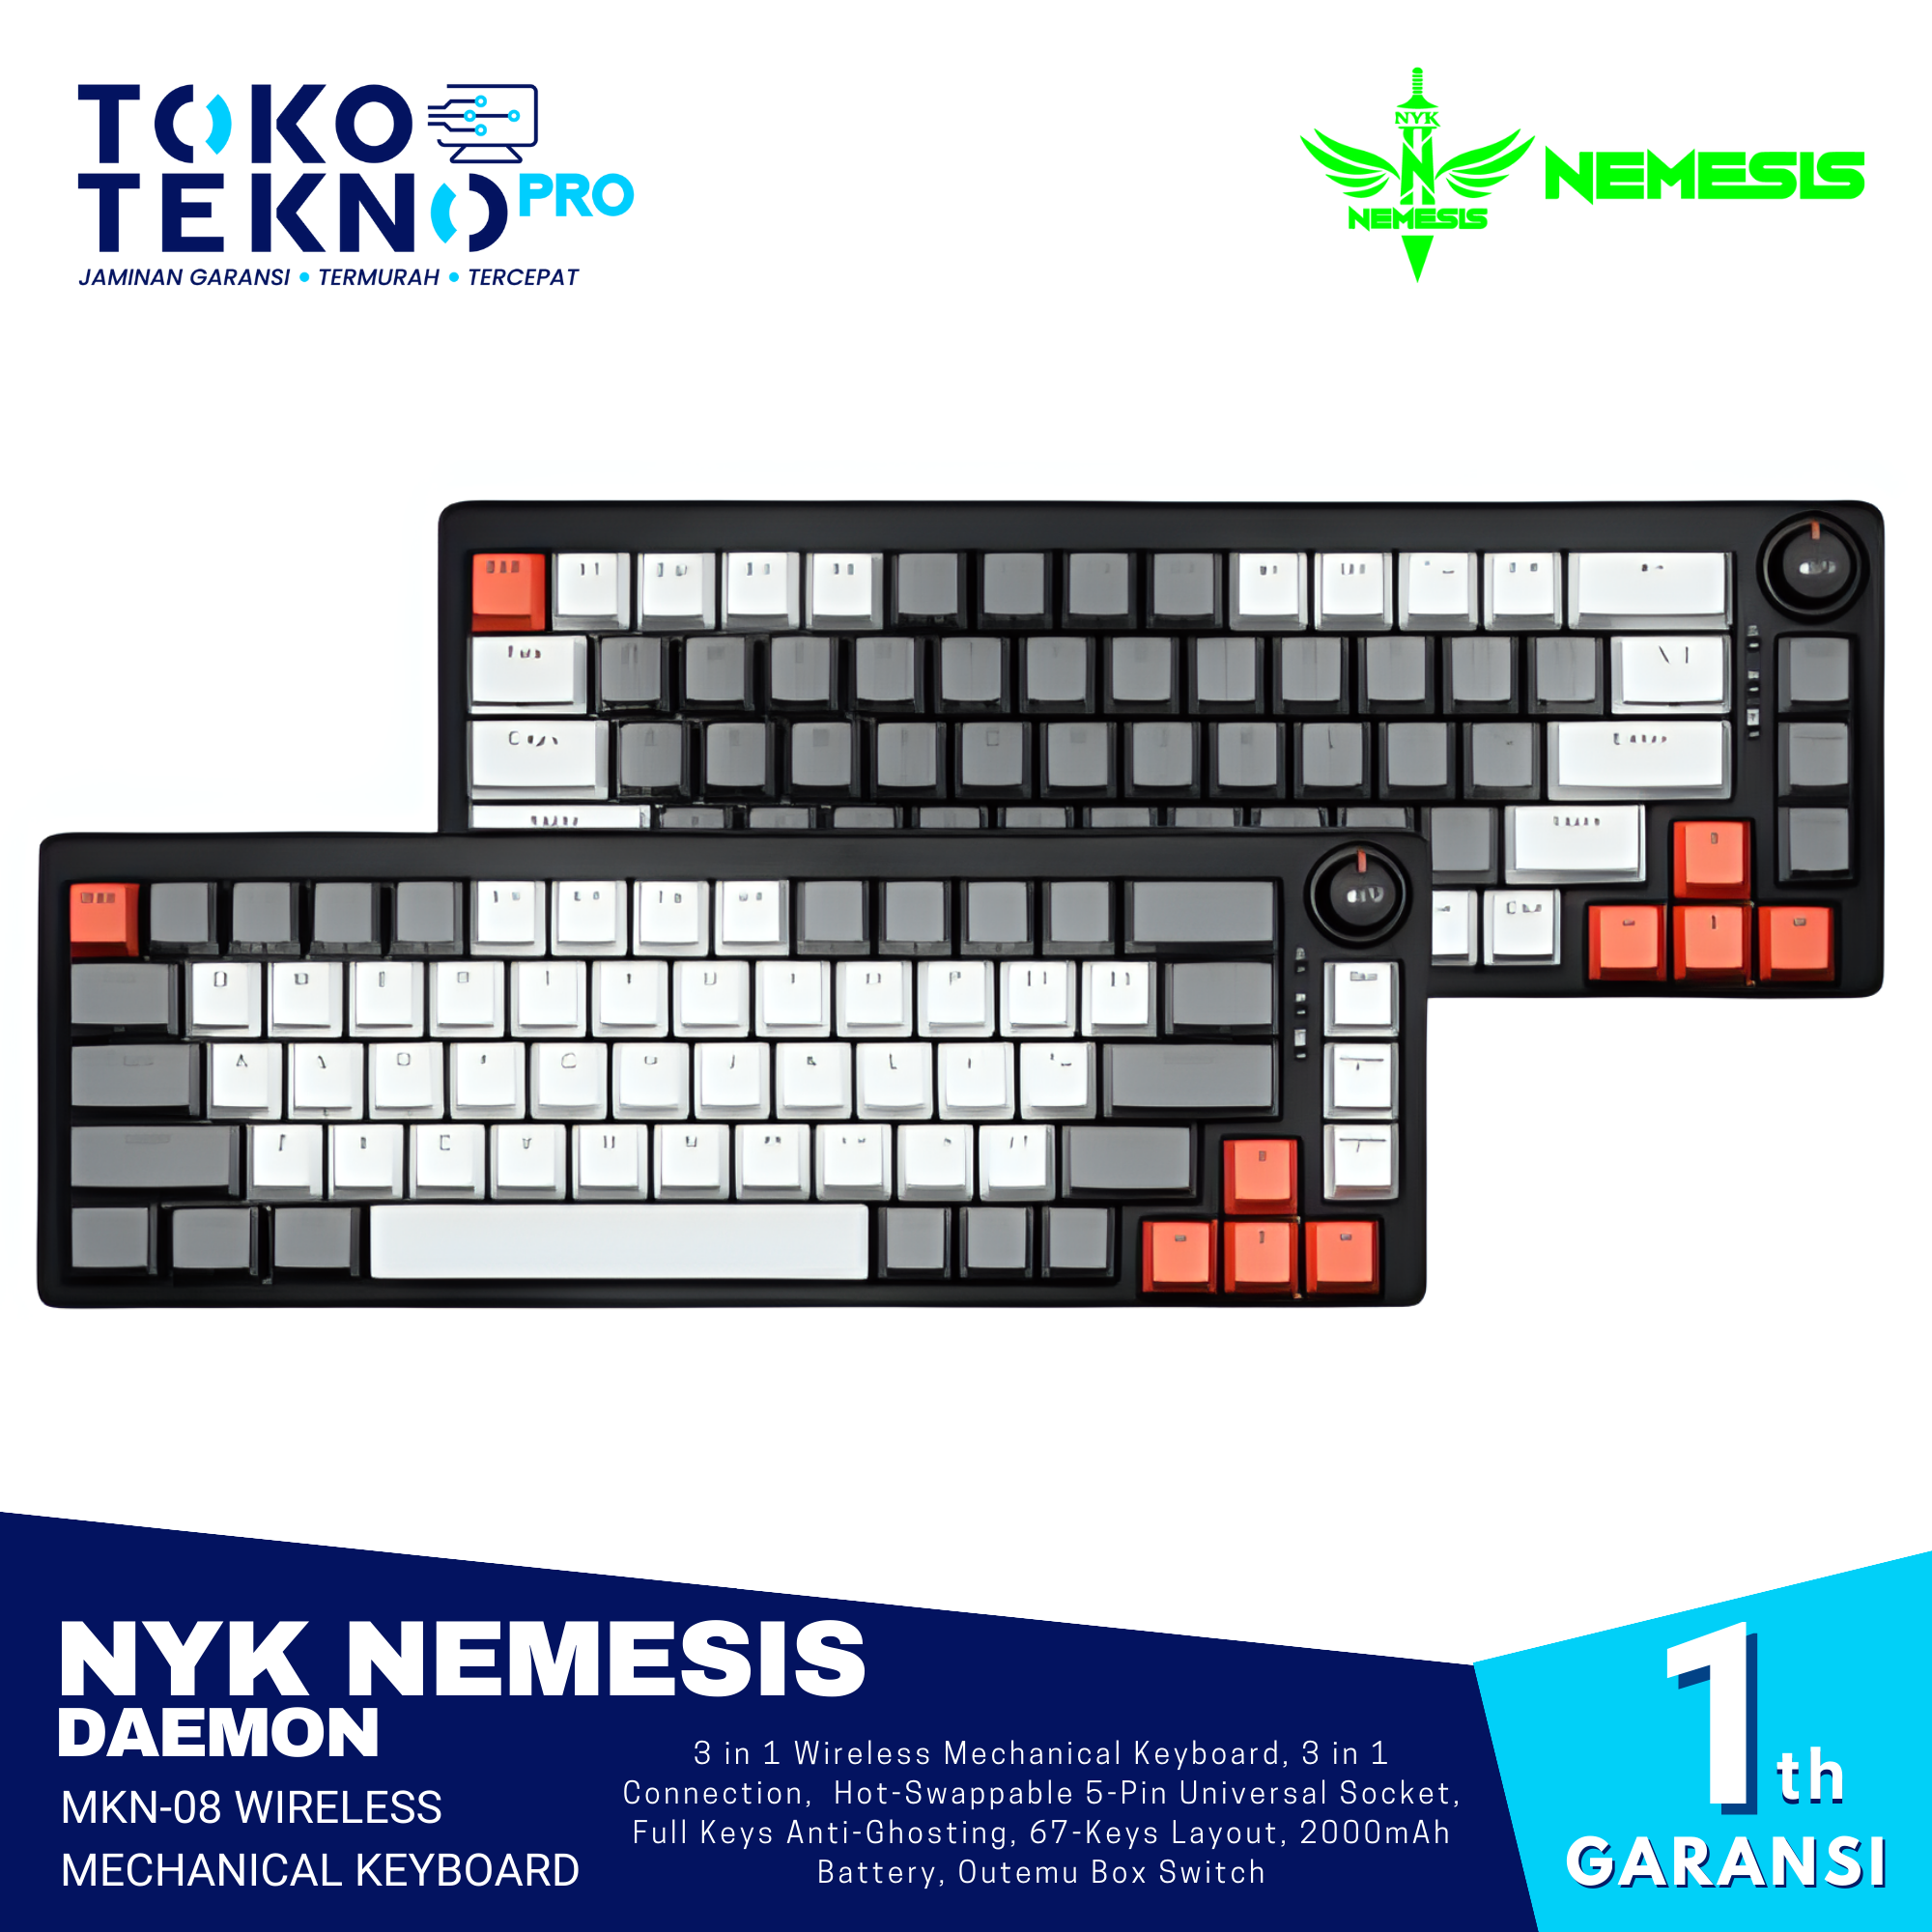 NYK Nemesis Daemon MKN08 Wireless Mechanical Keyboard Gaming